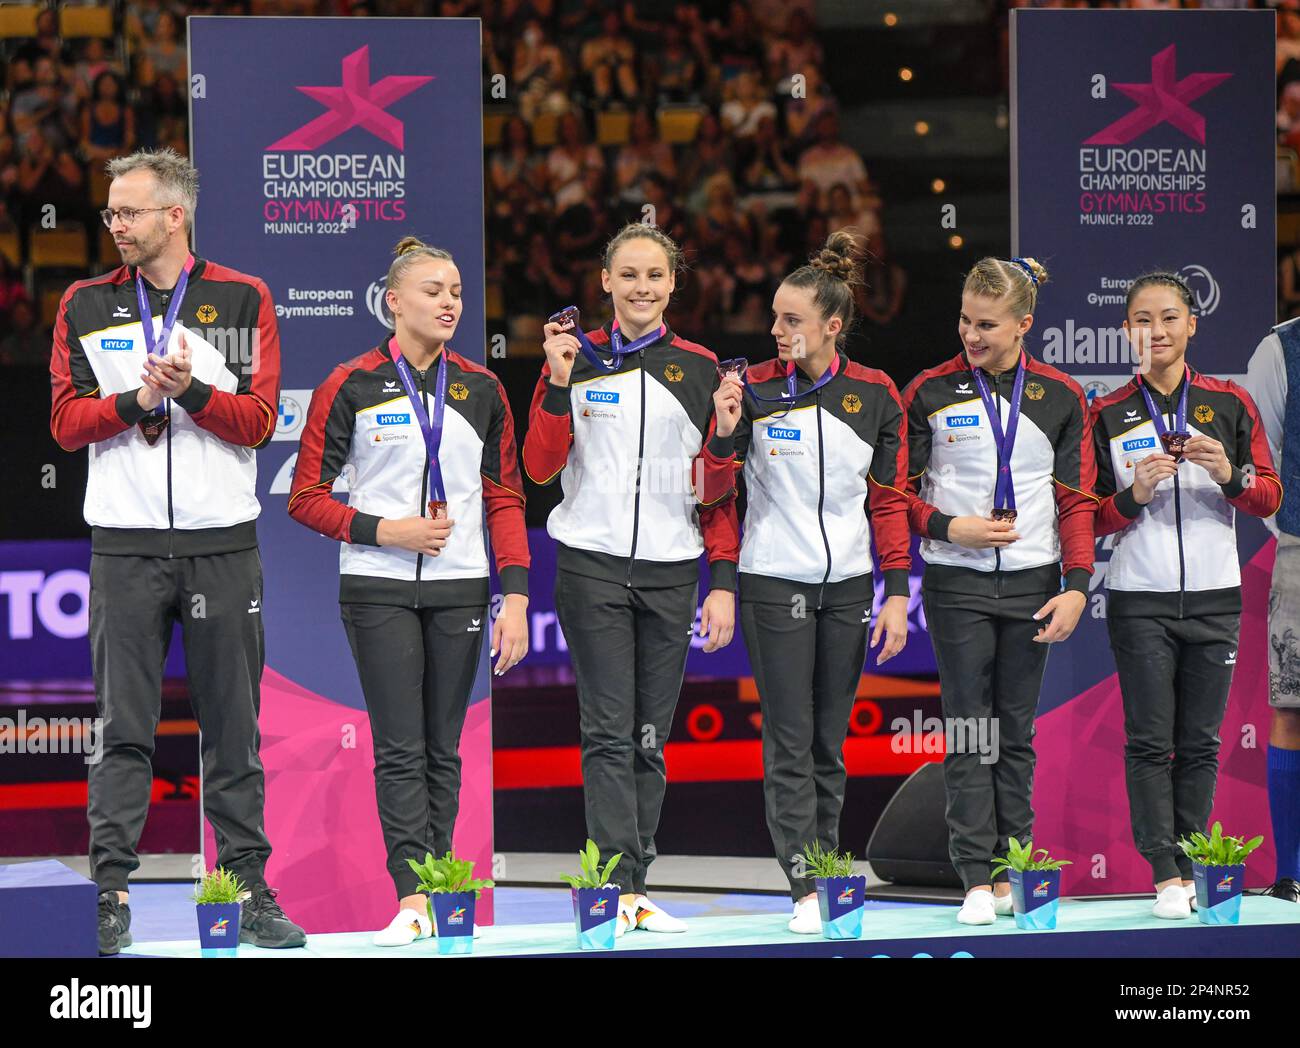 European Championships Munich 2022: Artistic Gymnastics. Elisabeth Seitz, Kim Bui, Pauline Schäfer, Sarah Voss, Emma Malewski. Germany, Bronze Medal. Stock Photo